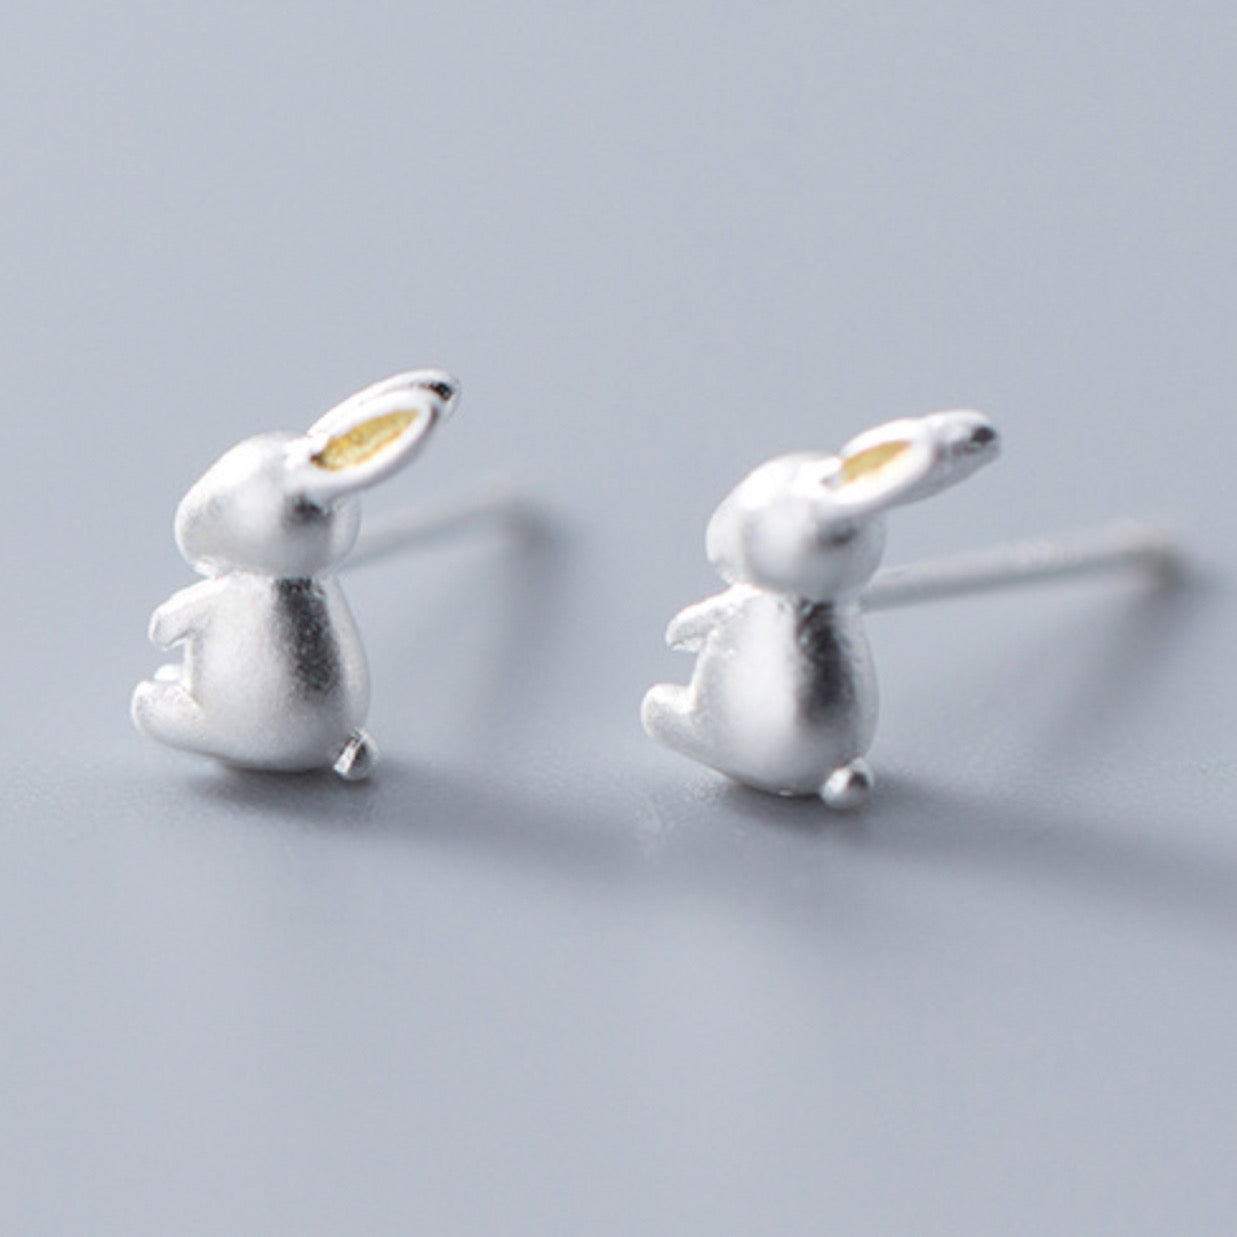 Bunny Rabbit Stud Earrings